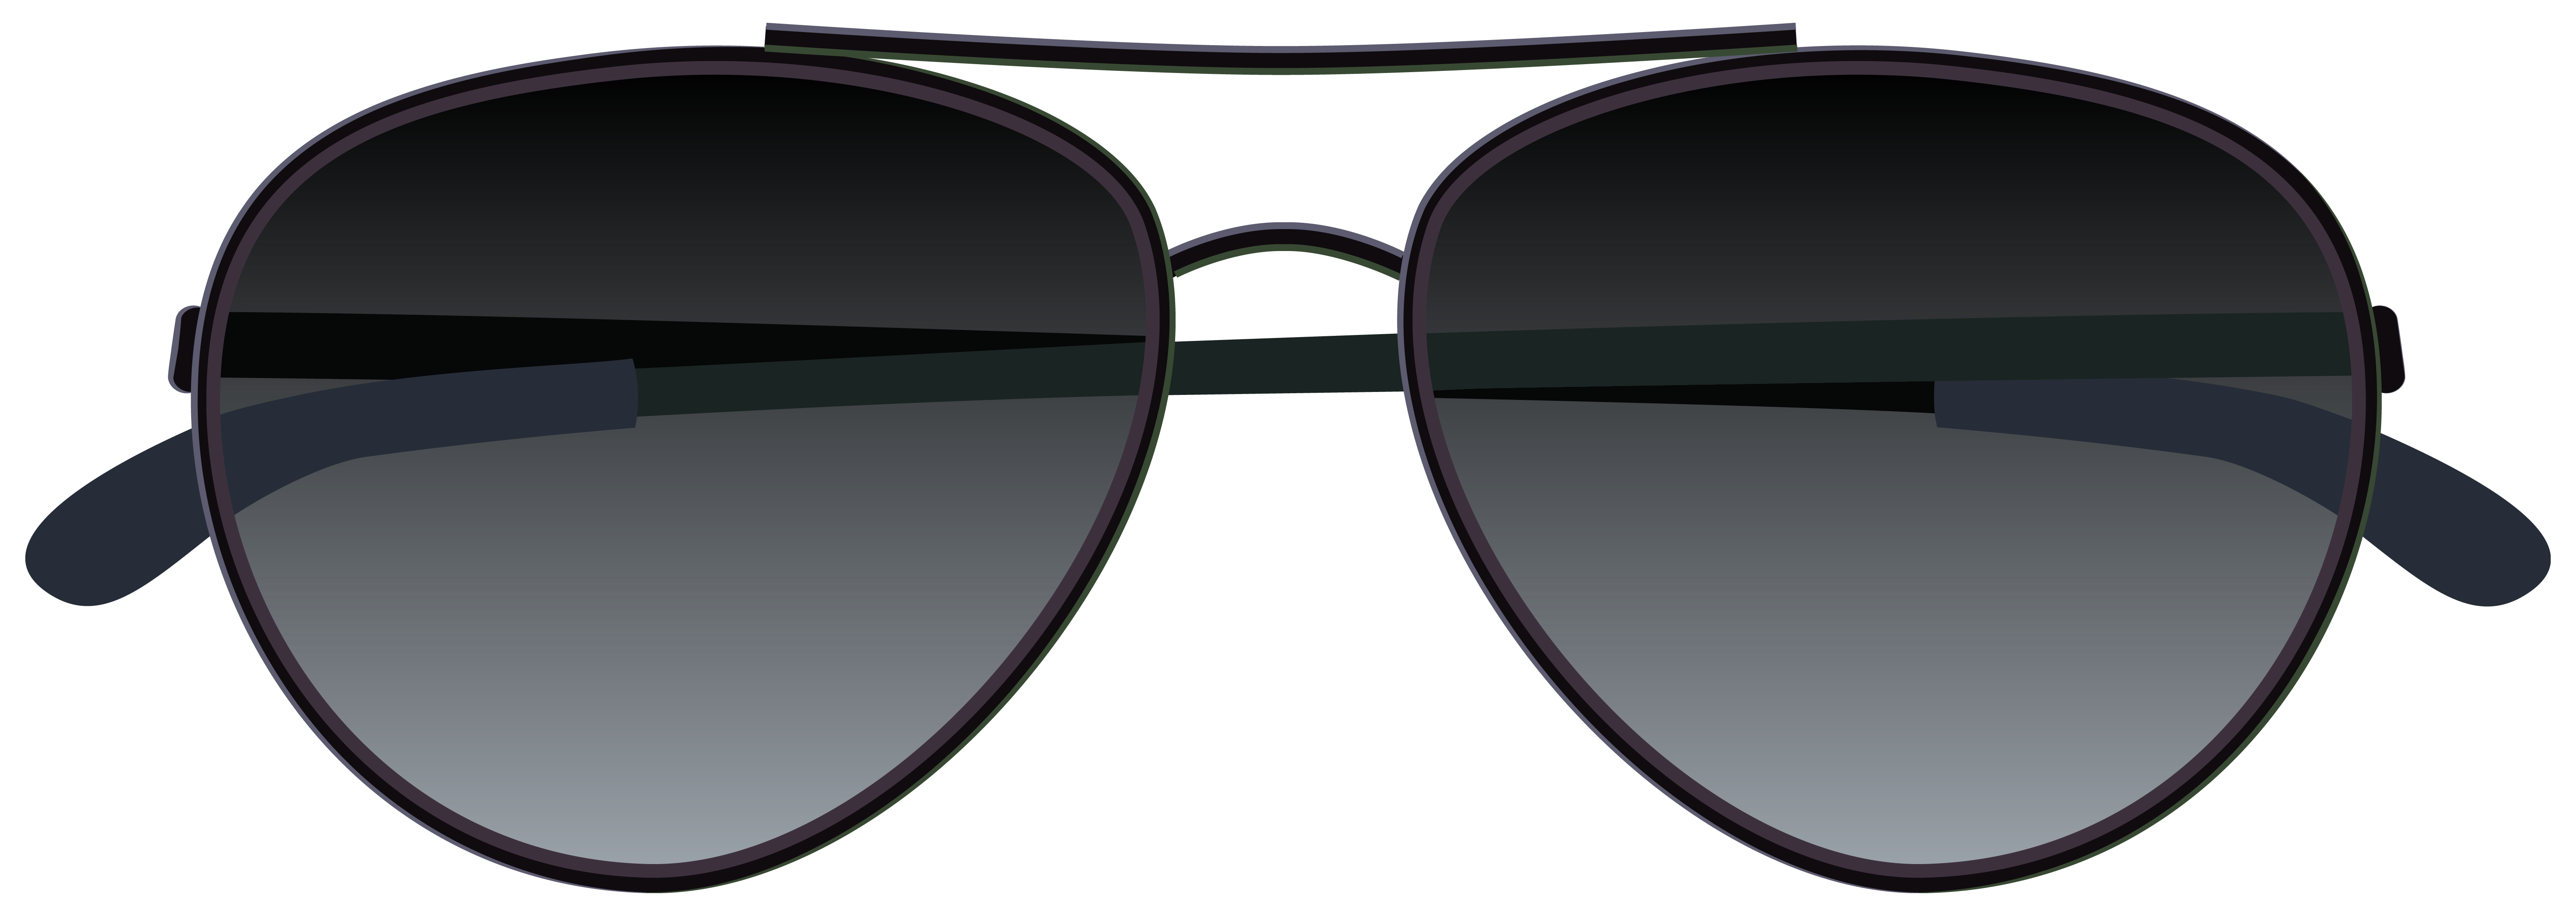 Download PNG image - Sunglasses Transparent Background 